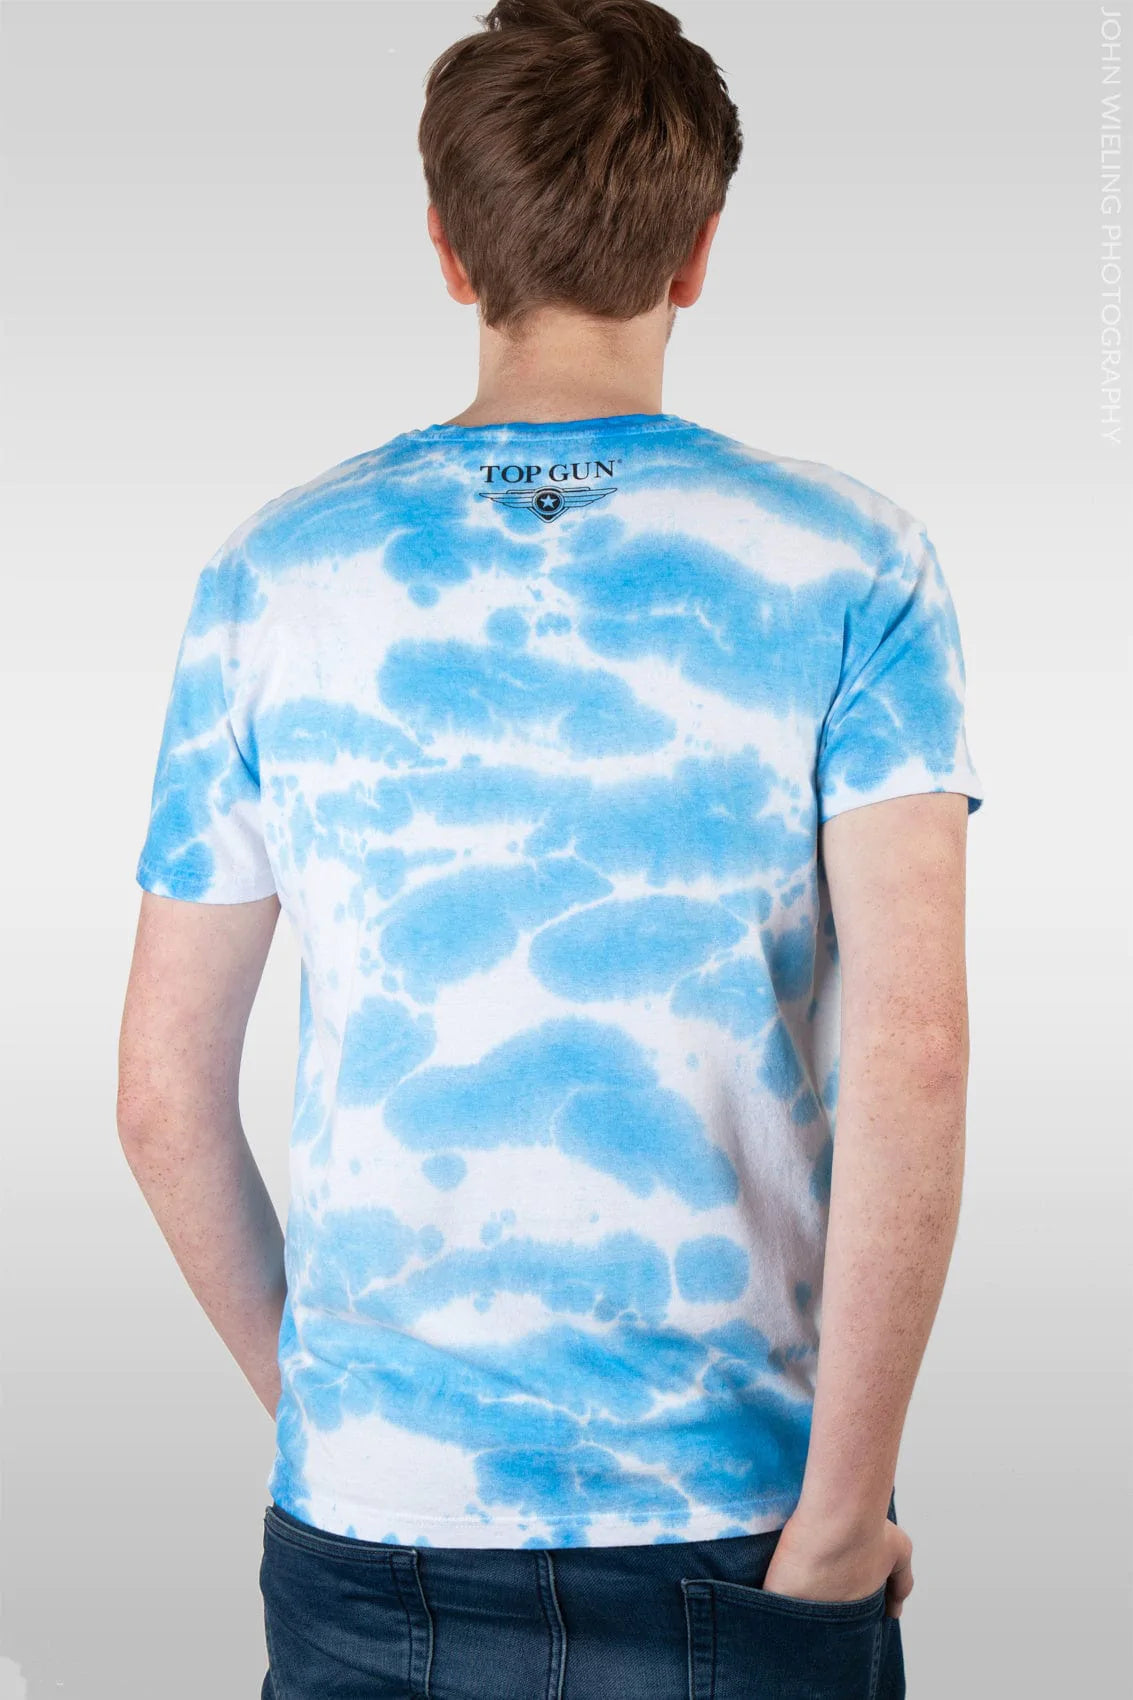 Top Gun T-Shirt "American Icon" camouflage blue